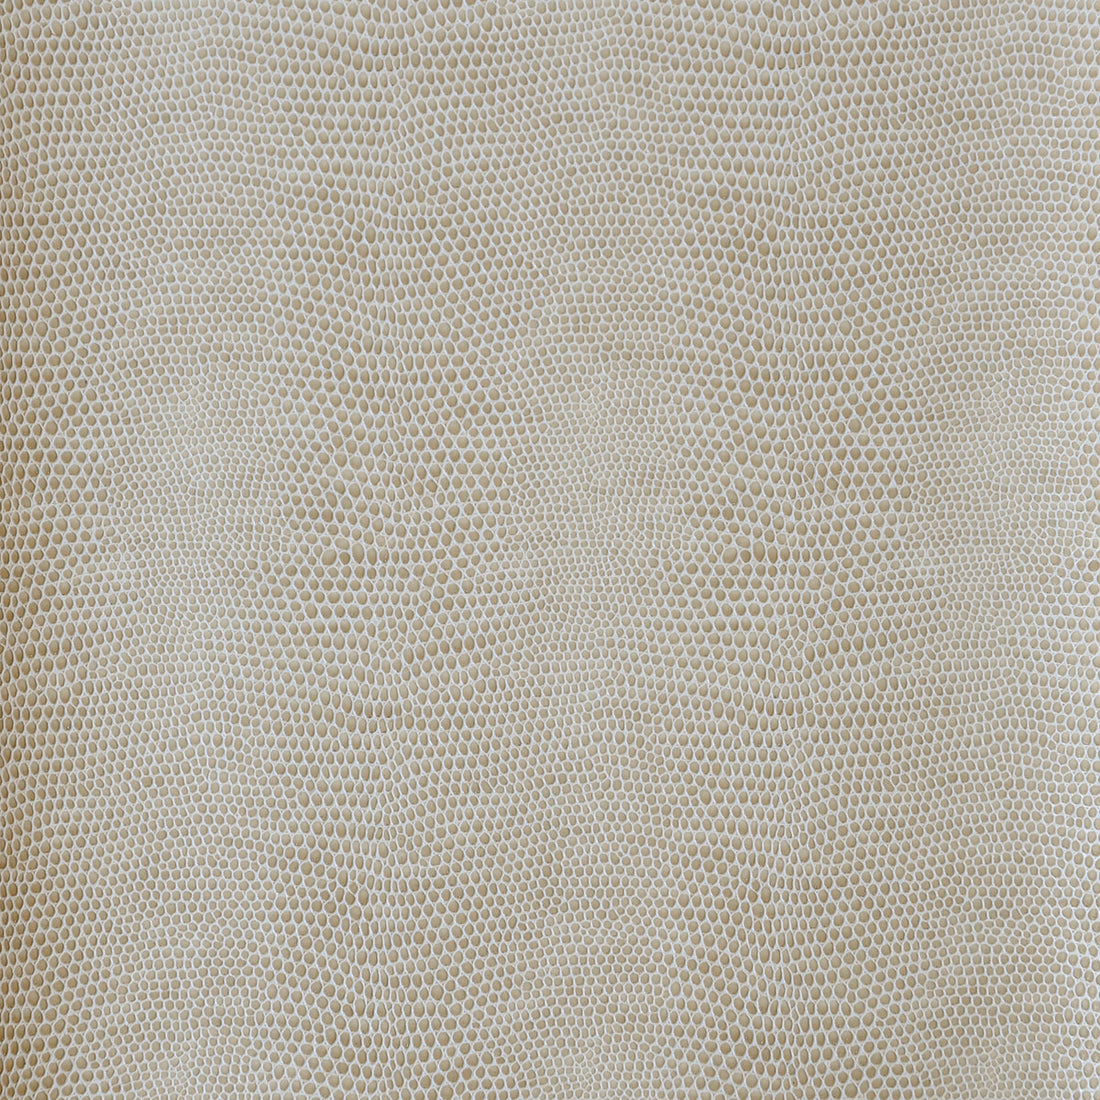 Kravet Design fabric in derek-116 color - pattern DEREK.116.0 - by Kravet Design